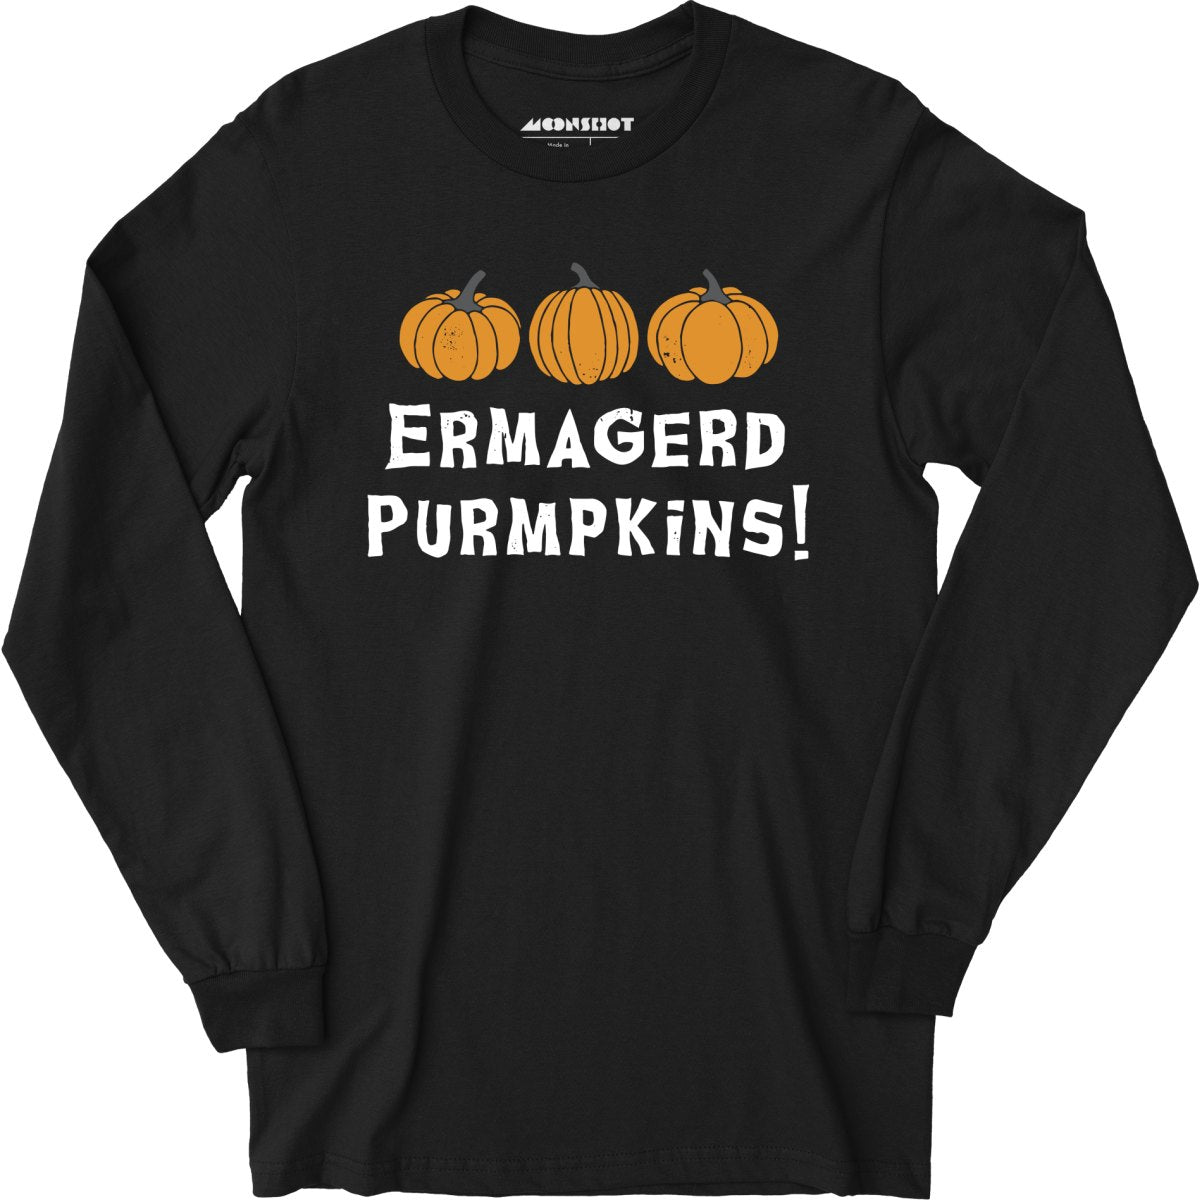 Ermagerd Purmpkins! - Long Sleeve T-Shirt